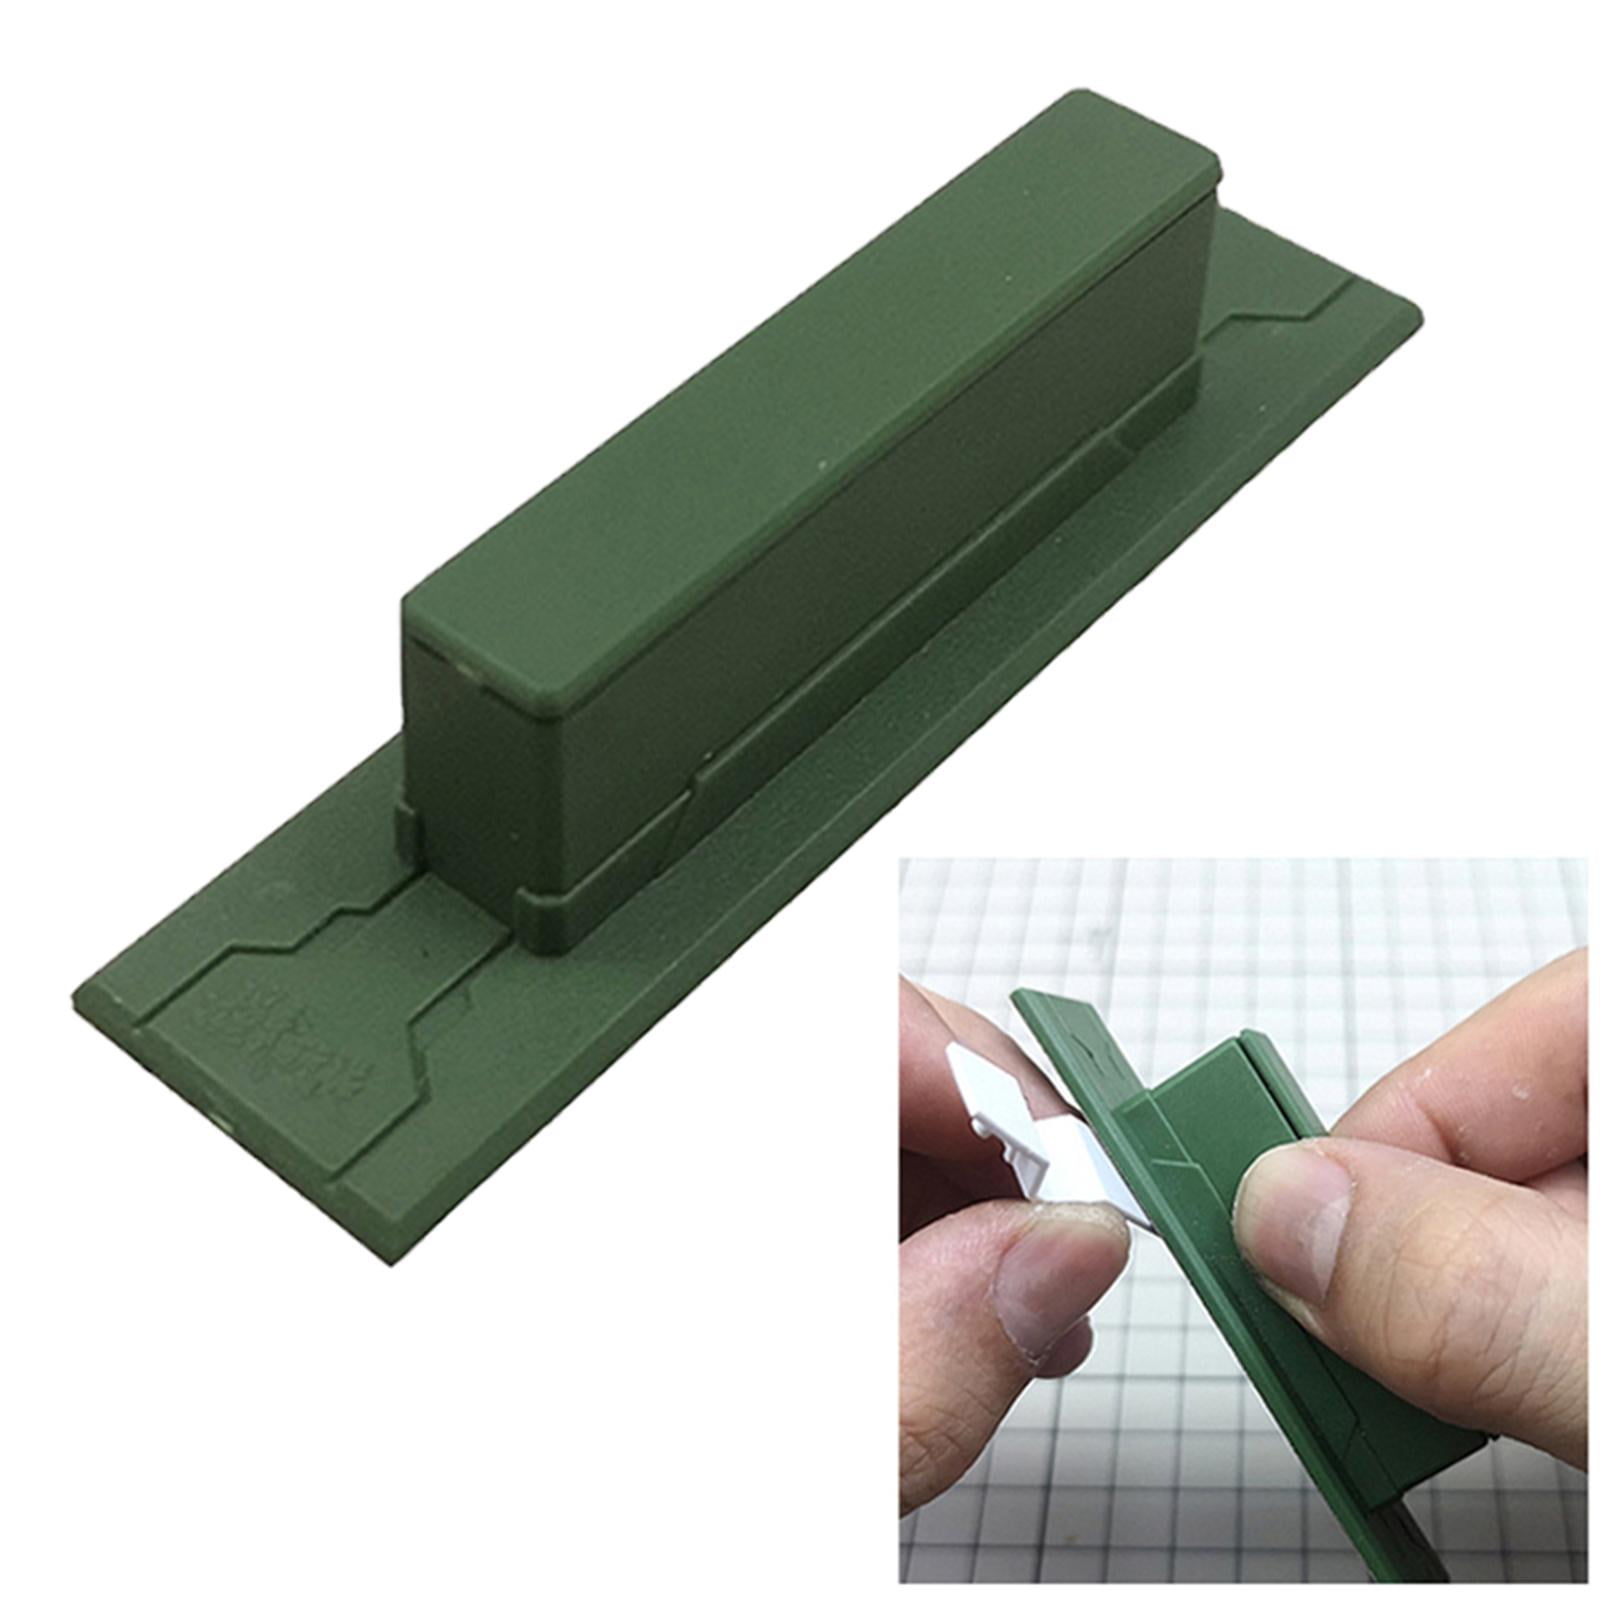 Details about   Hand Grip Sandpaper Holder Handheld Sand Paper Board Polishing Accessory 